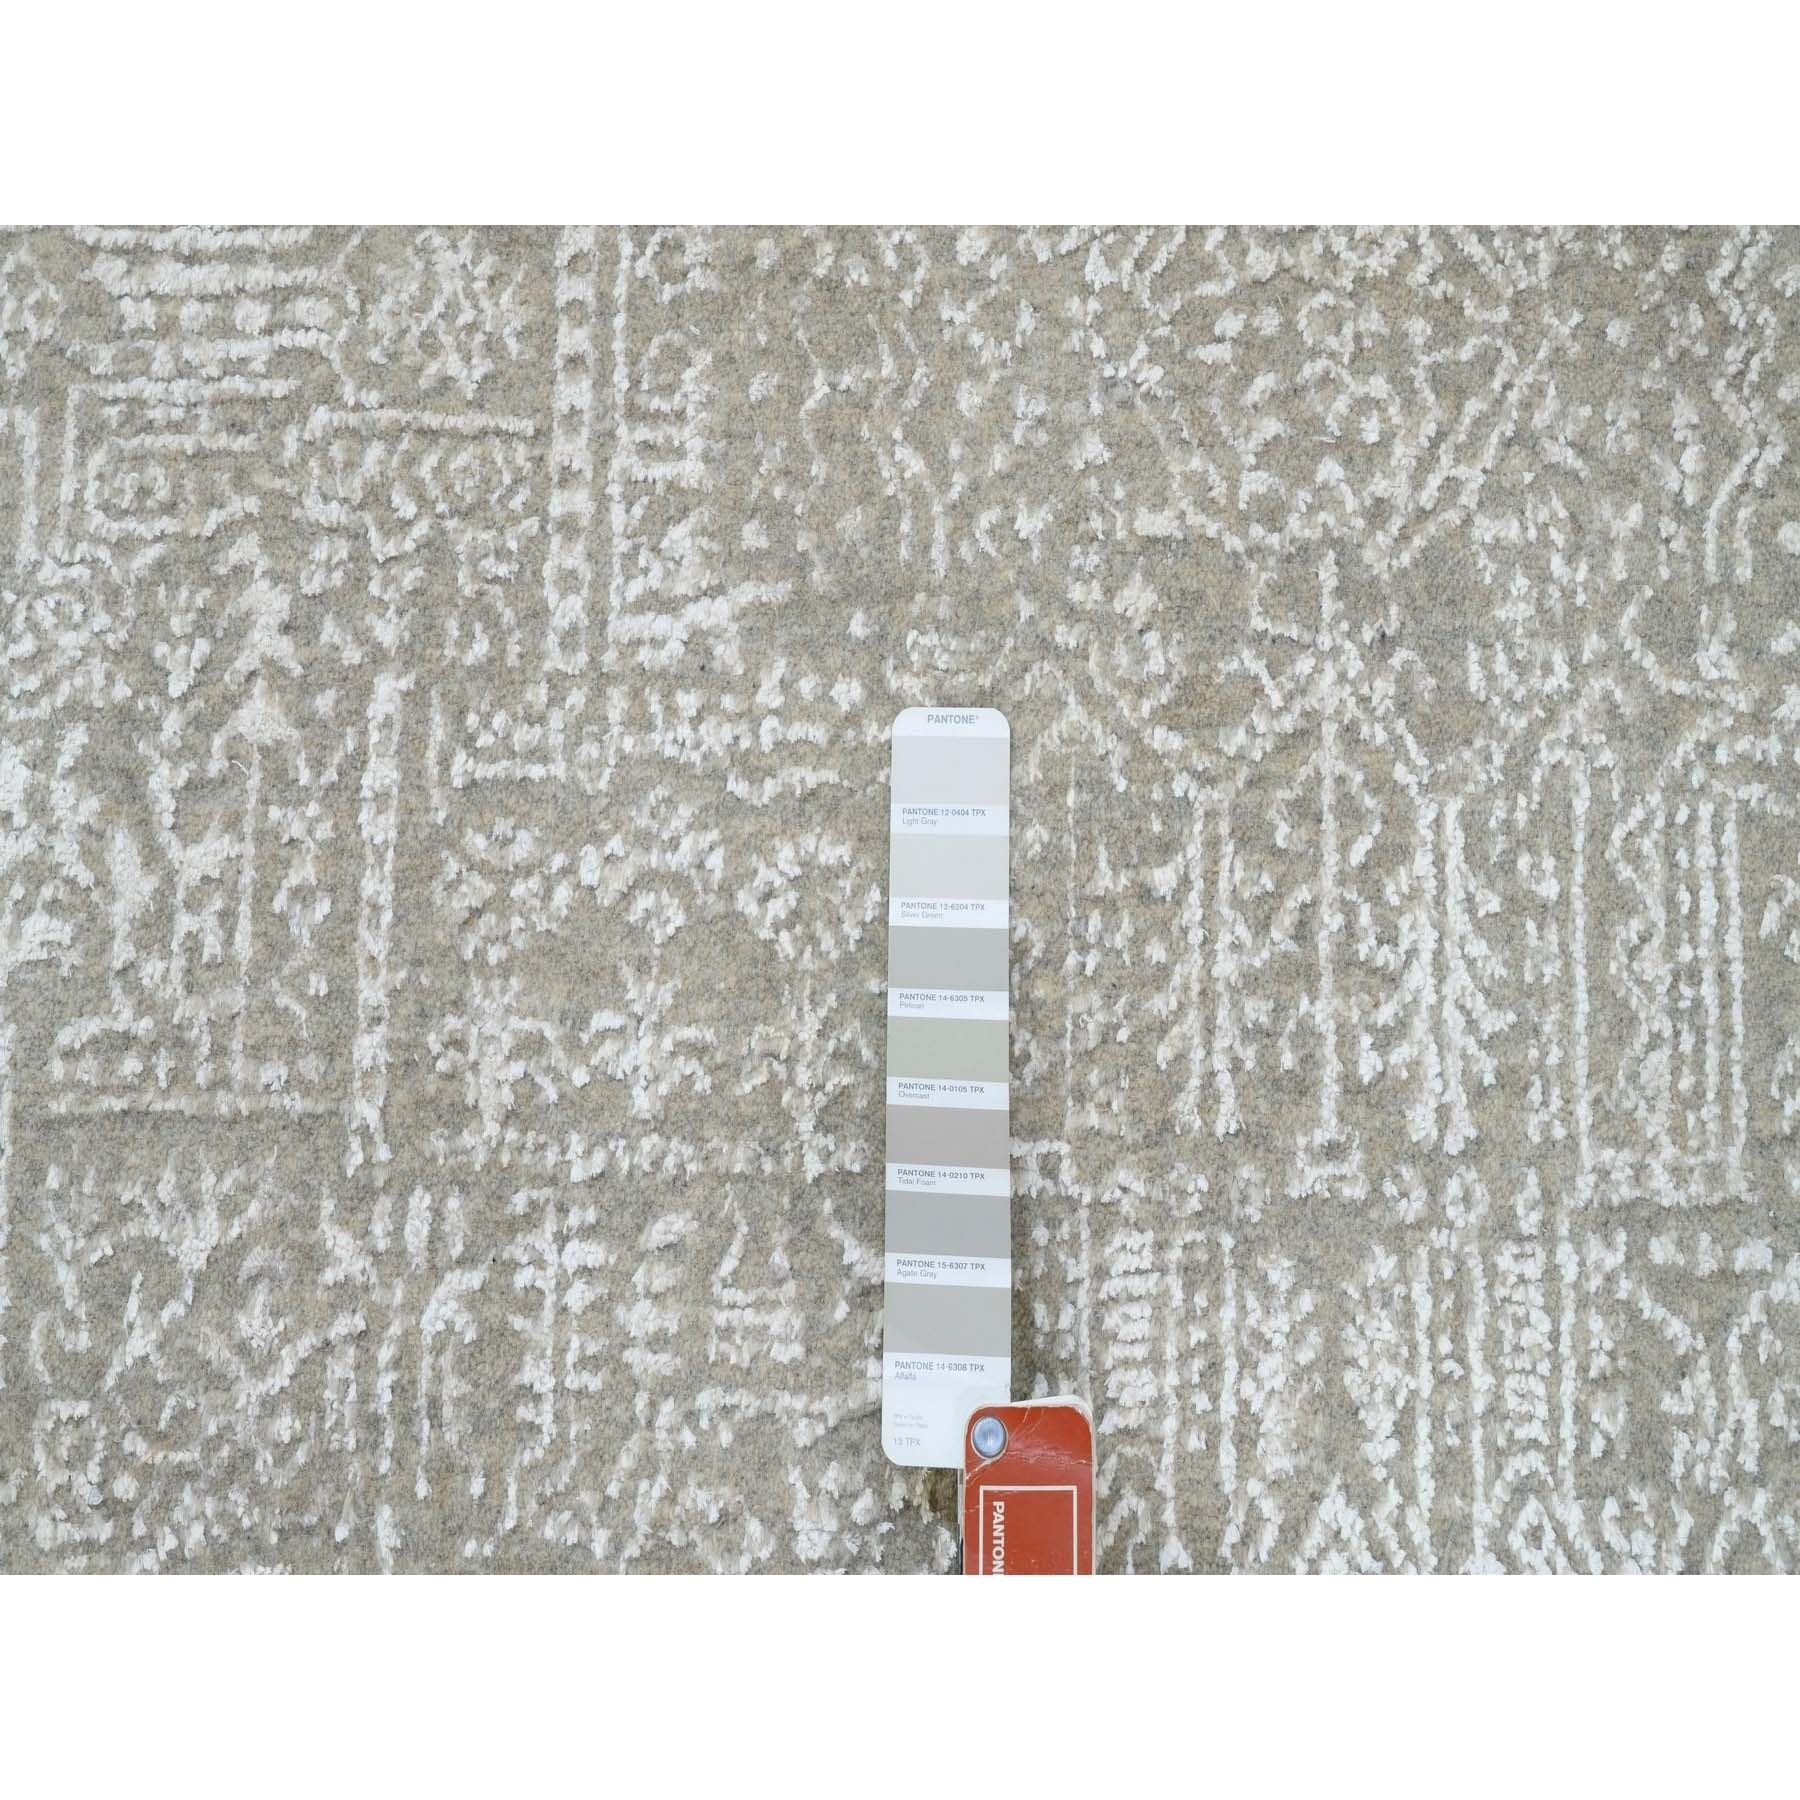 12'x12' Ivory Jacquard Hand Loomed Modern Organic Wool And Art Silk Oriental Round Rug 